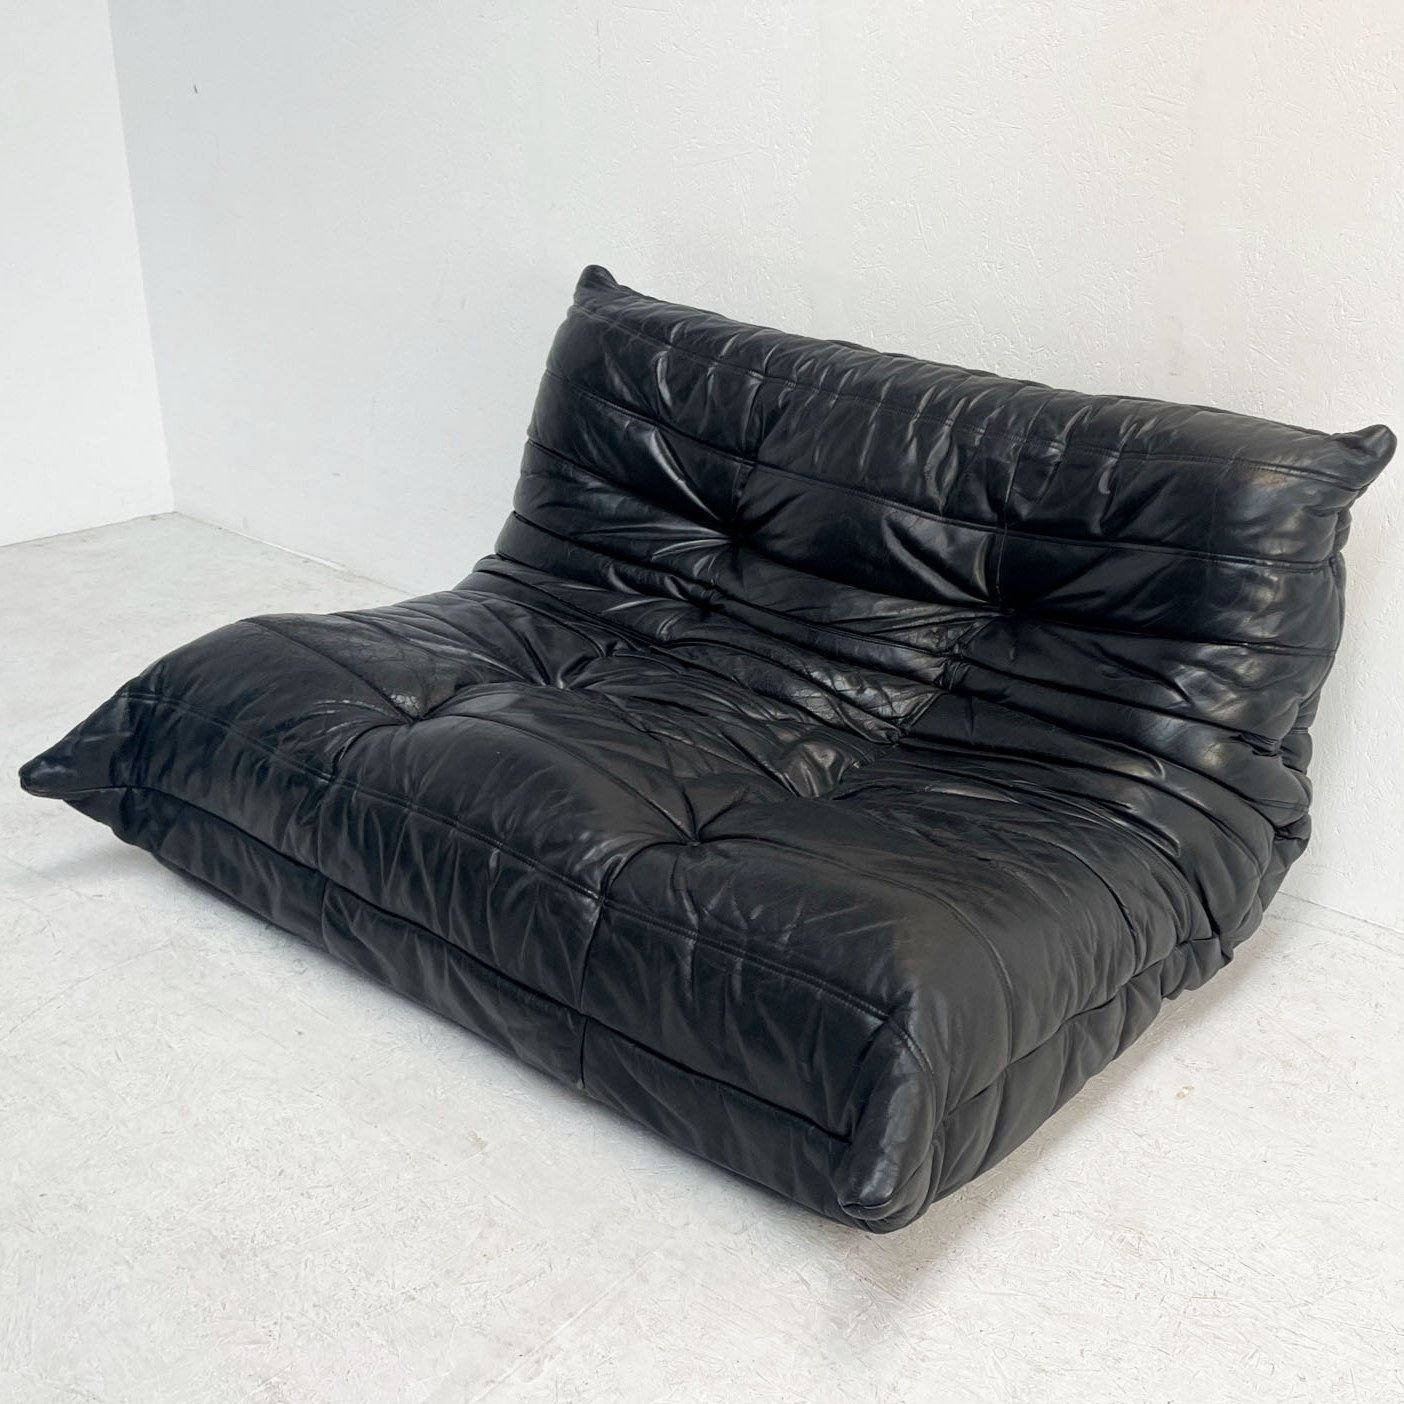 Original+black+leather+Togo+two+seater+by+Michel+Ducaroy+for+Ligne+Roset%2C+1970s+_+%23185613.jpg